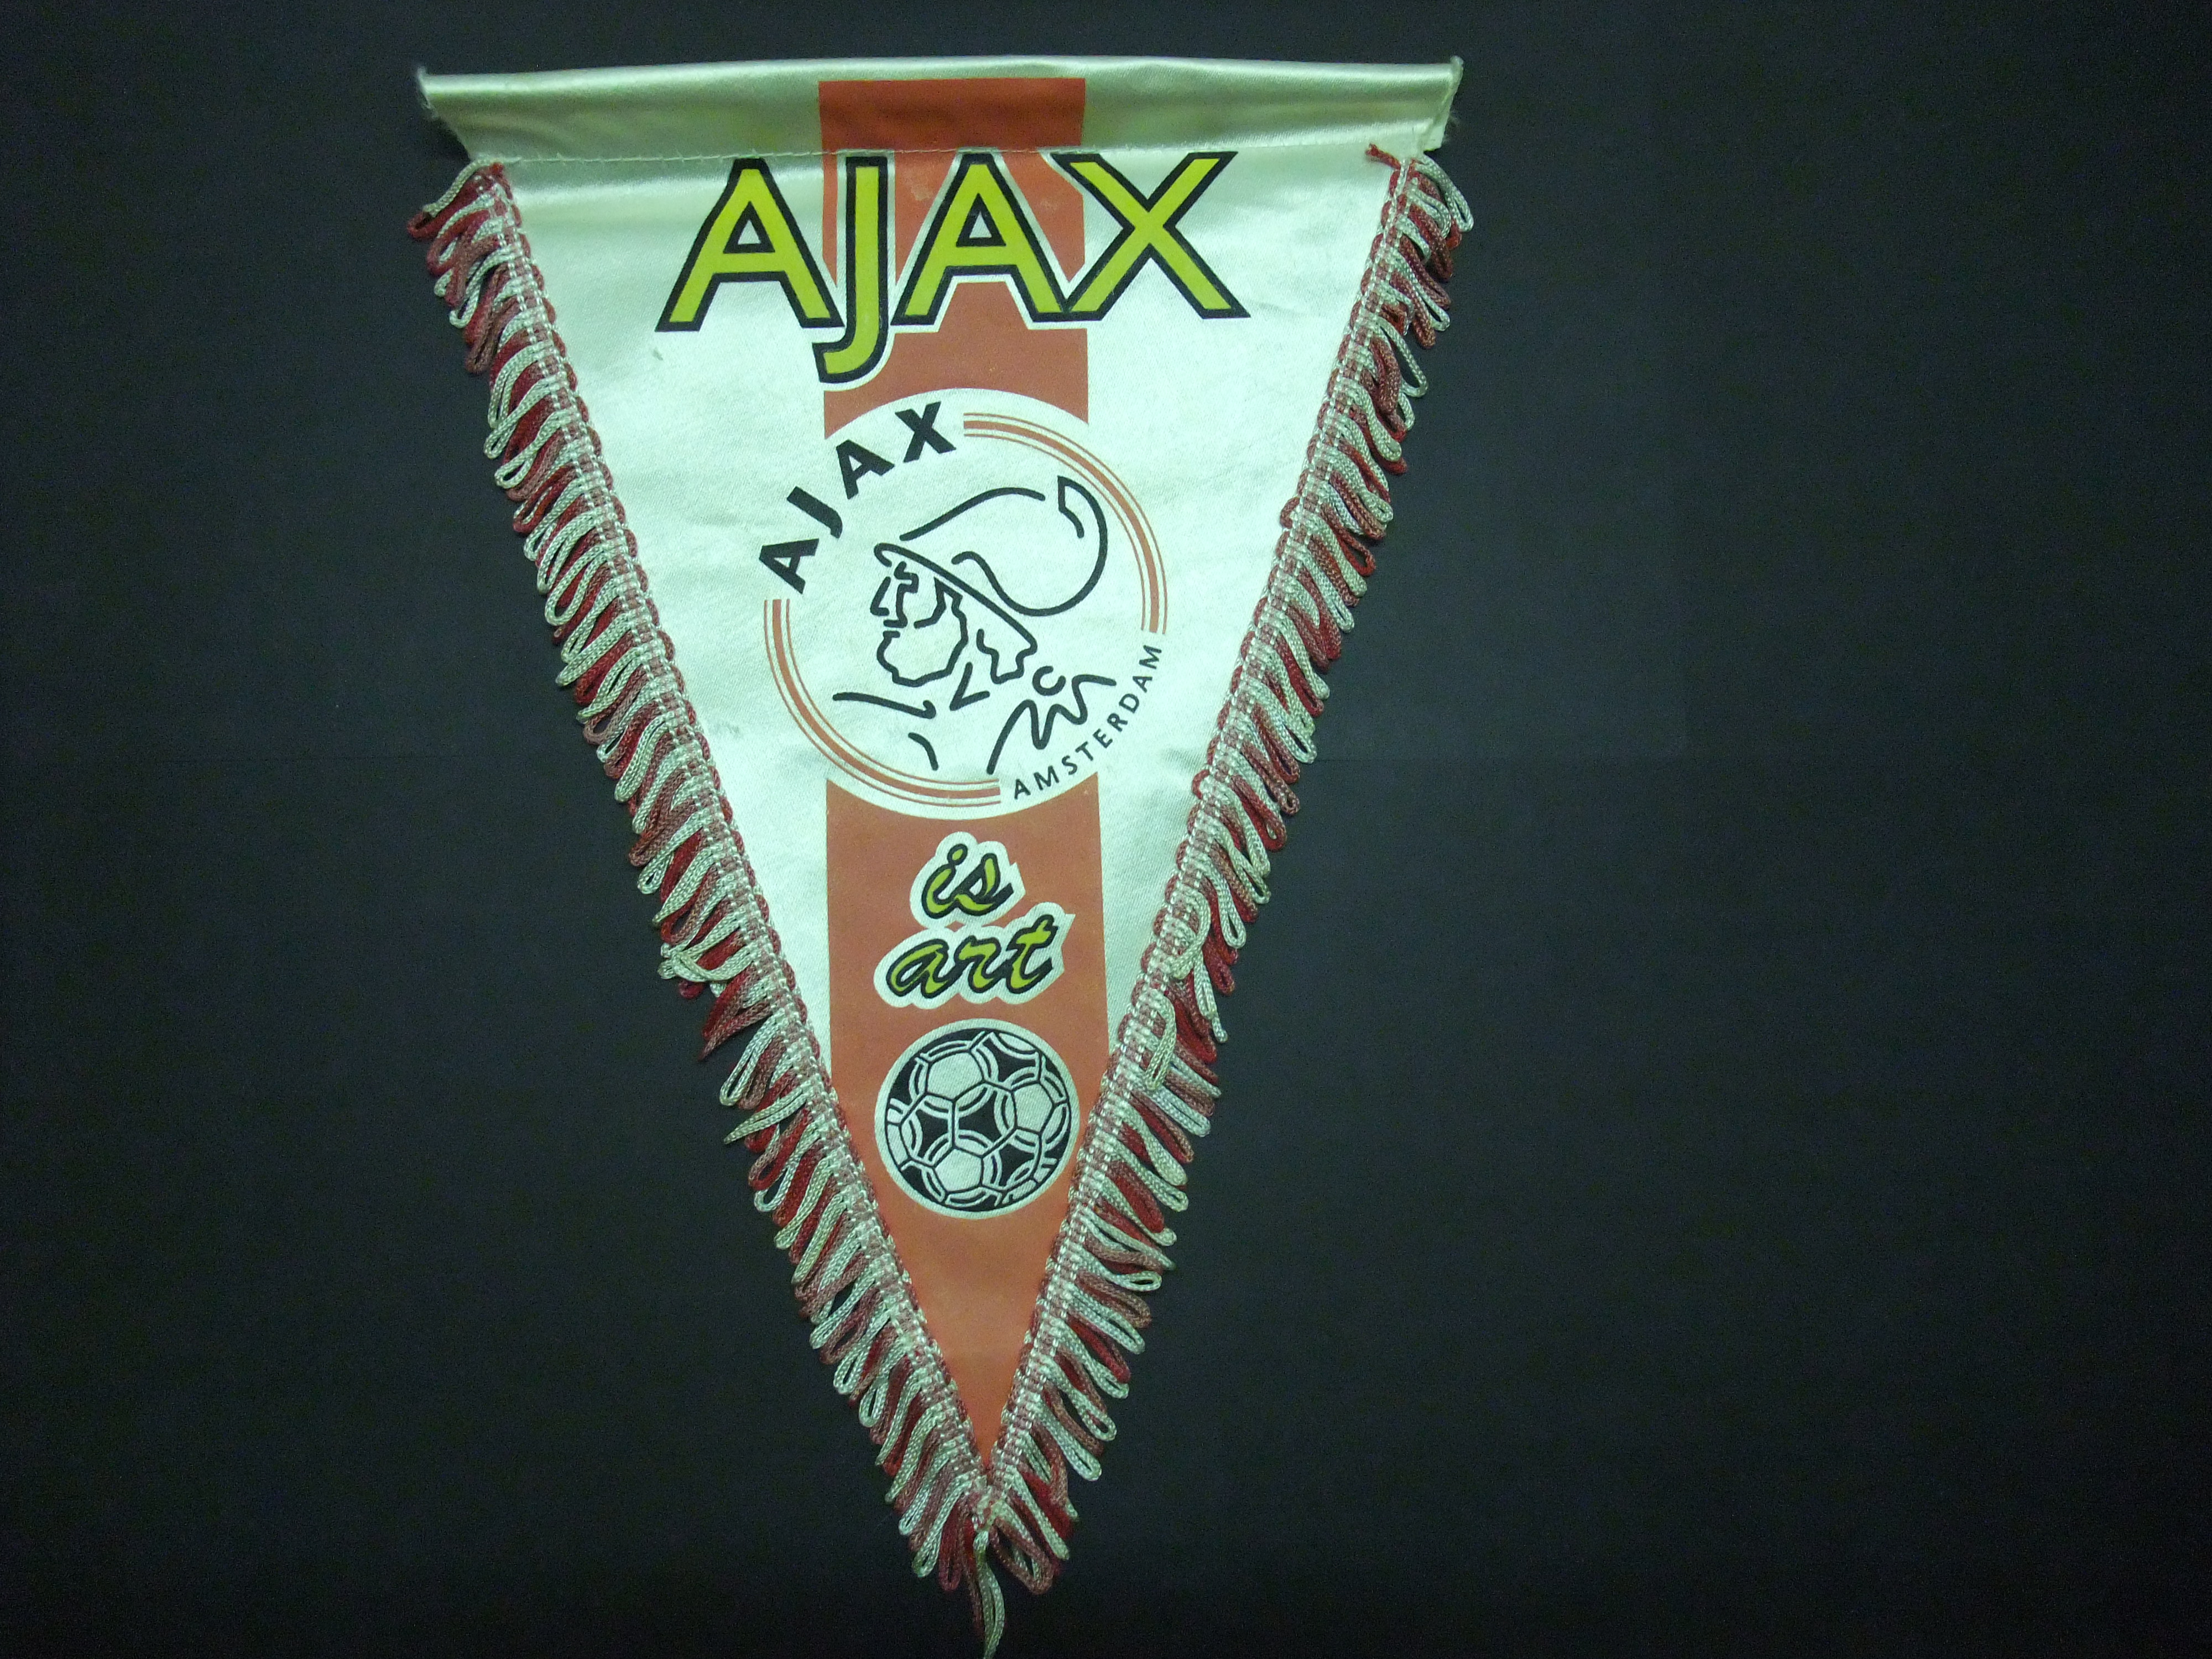 AJAX Amsterdam voetbalclub is Art vaantje